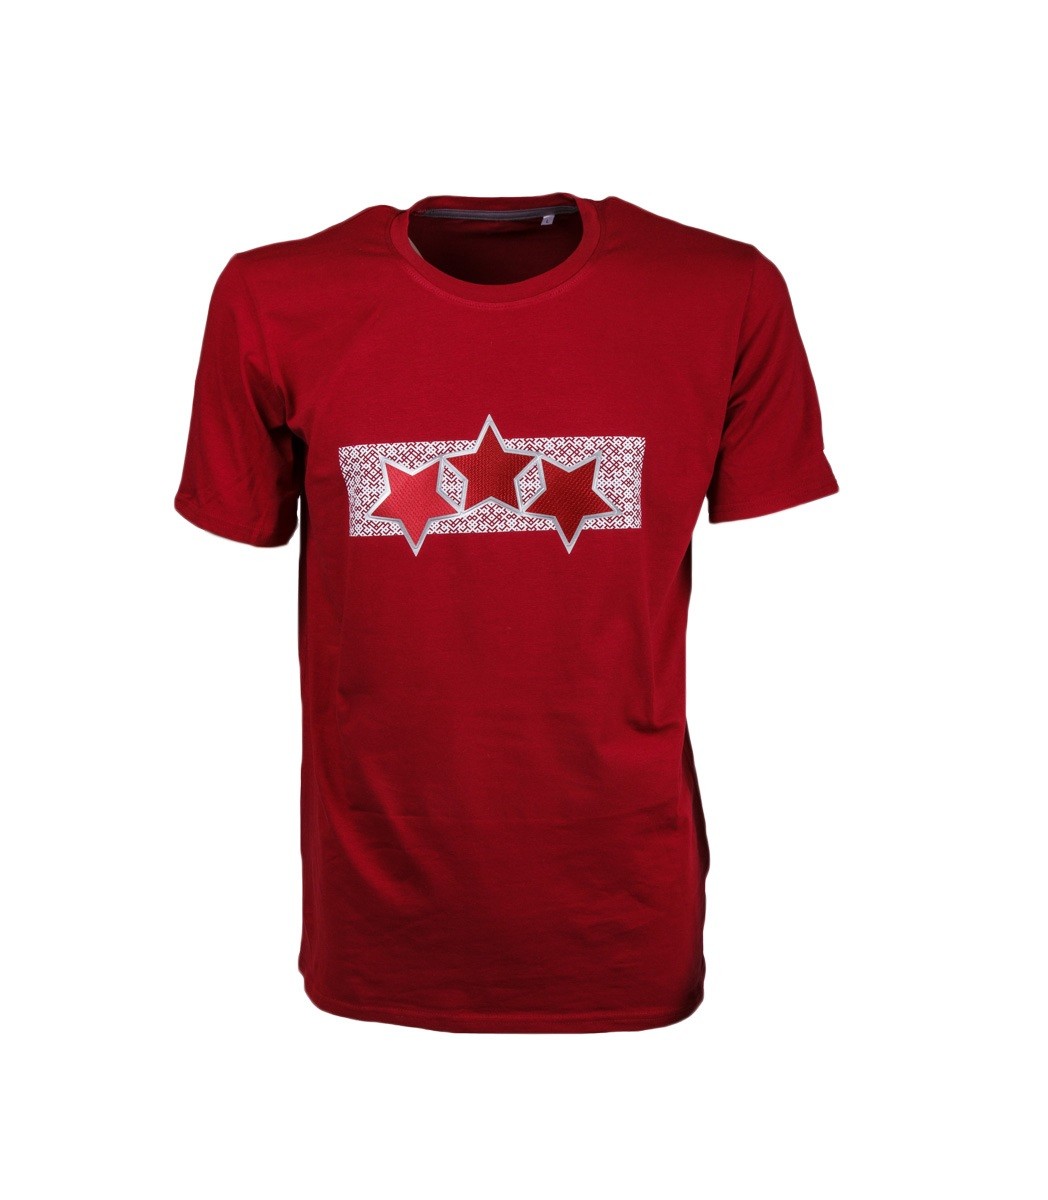 Junior Latvia Three Star T-Shirt